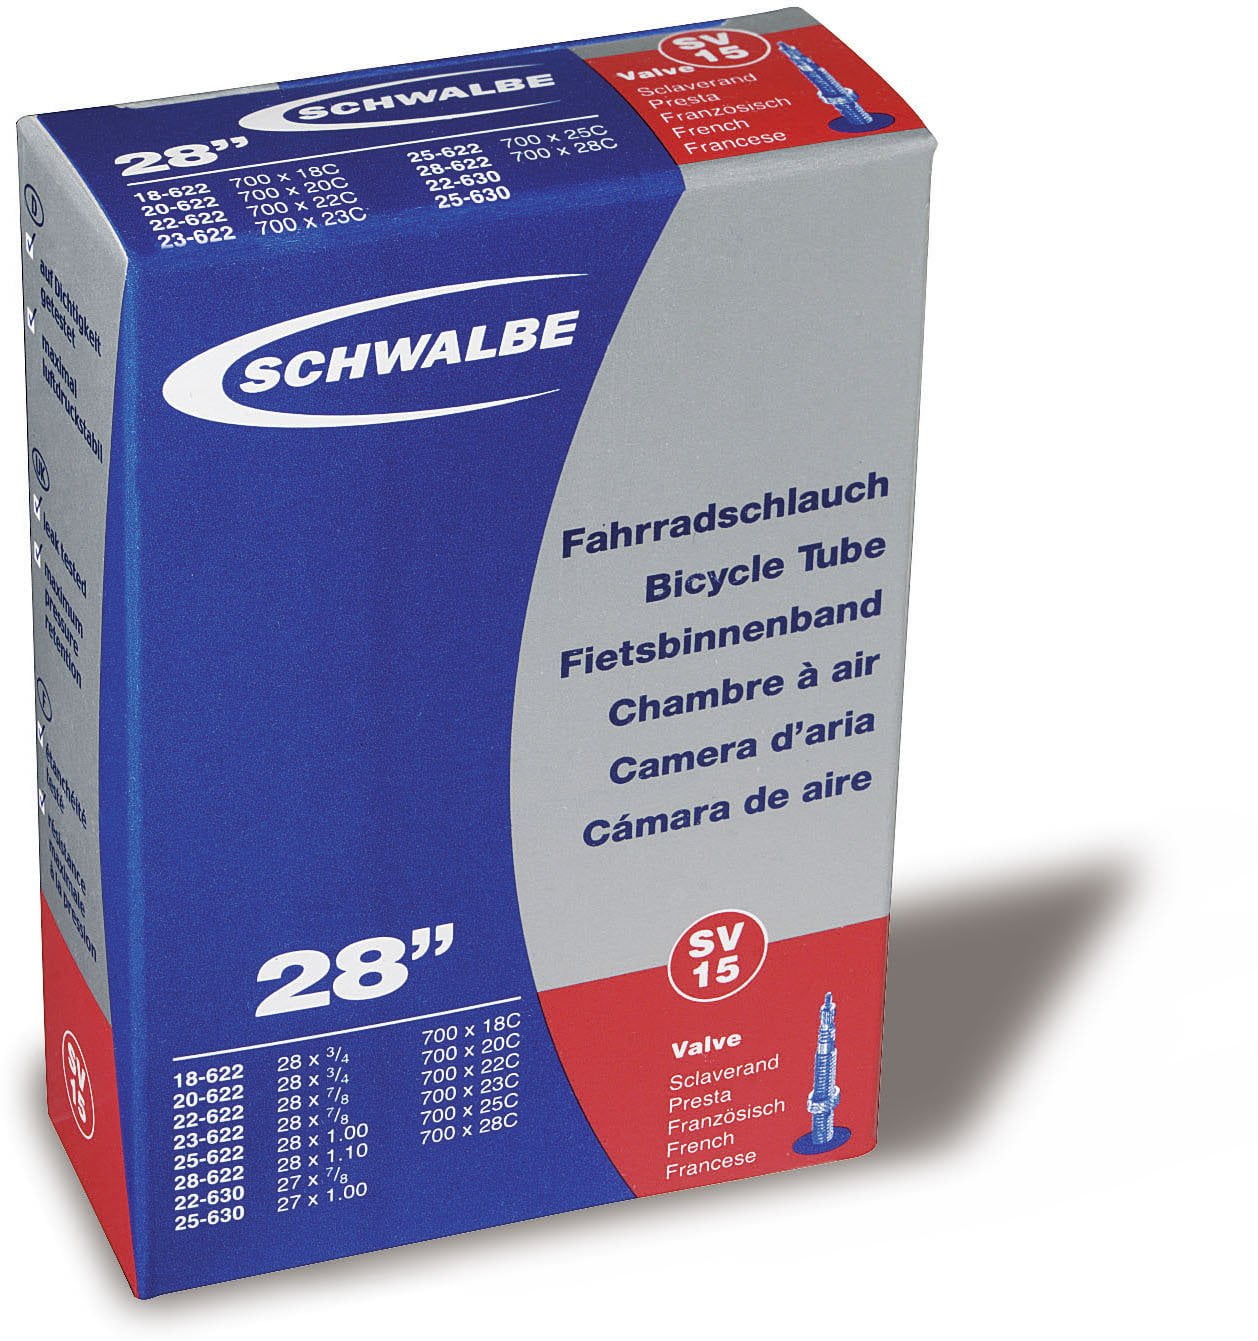 Presta Valve 27.5 x 1-1/2-28 x 1-1/2" Schwalbe Standard Tube 50mm 